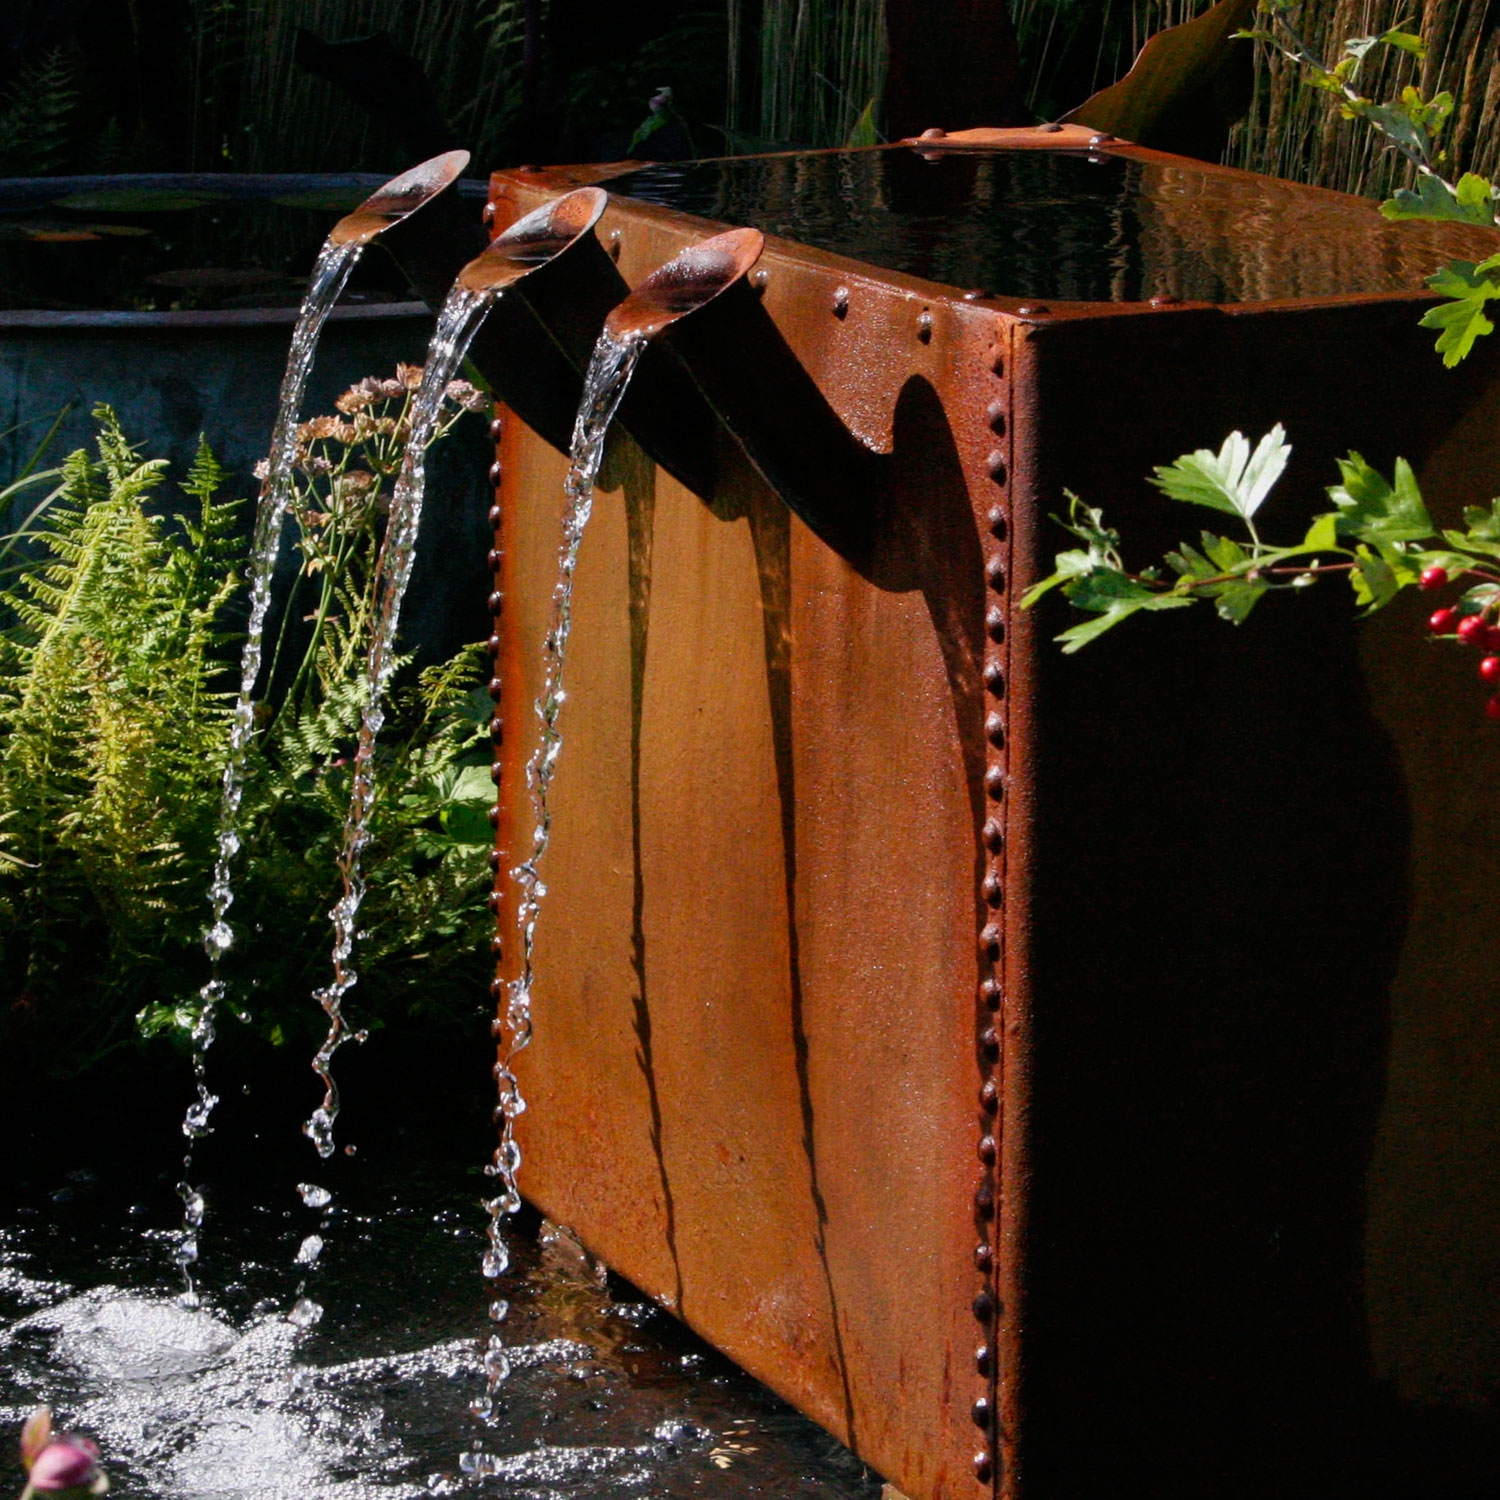  Girond Cauldron water feature - Peter Eustance Symphonic Gardens